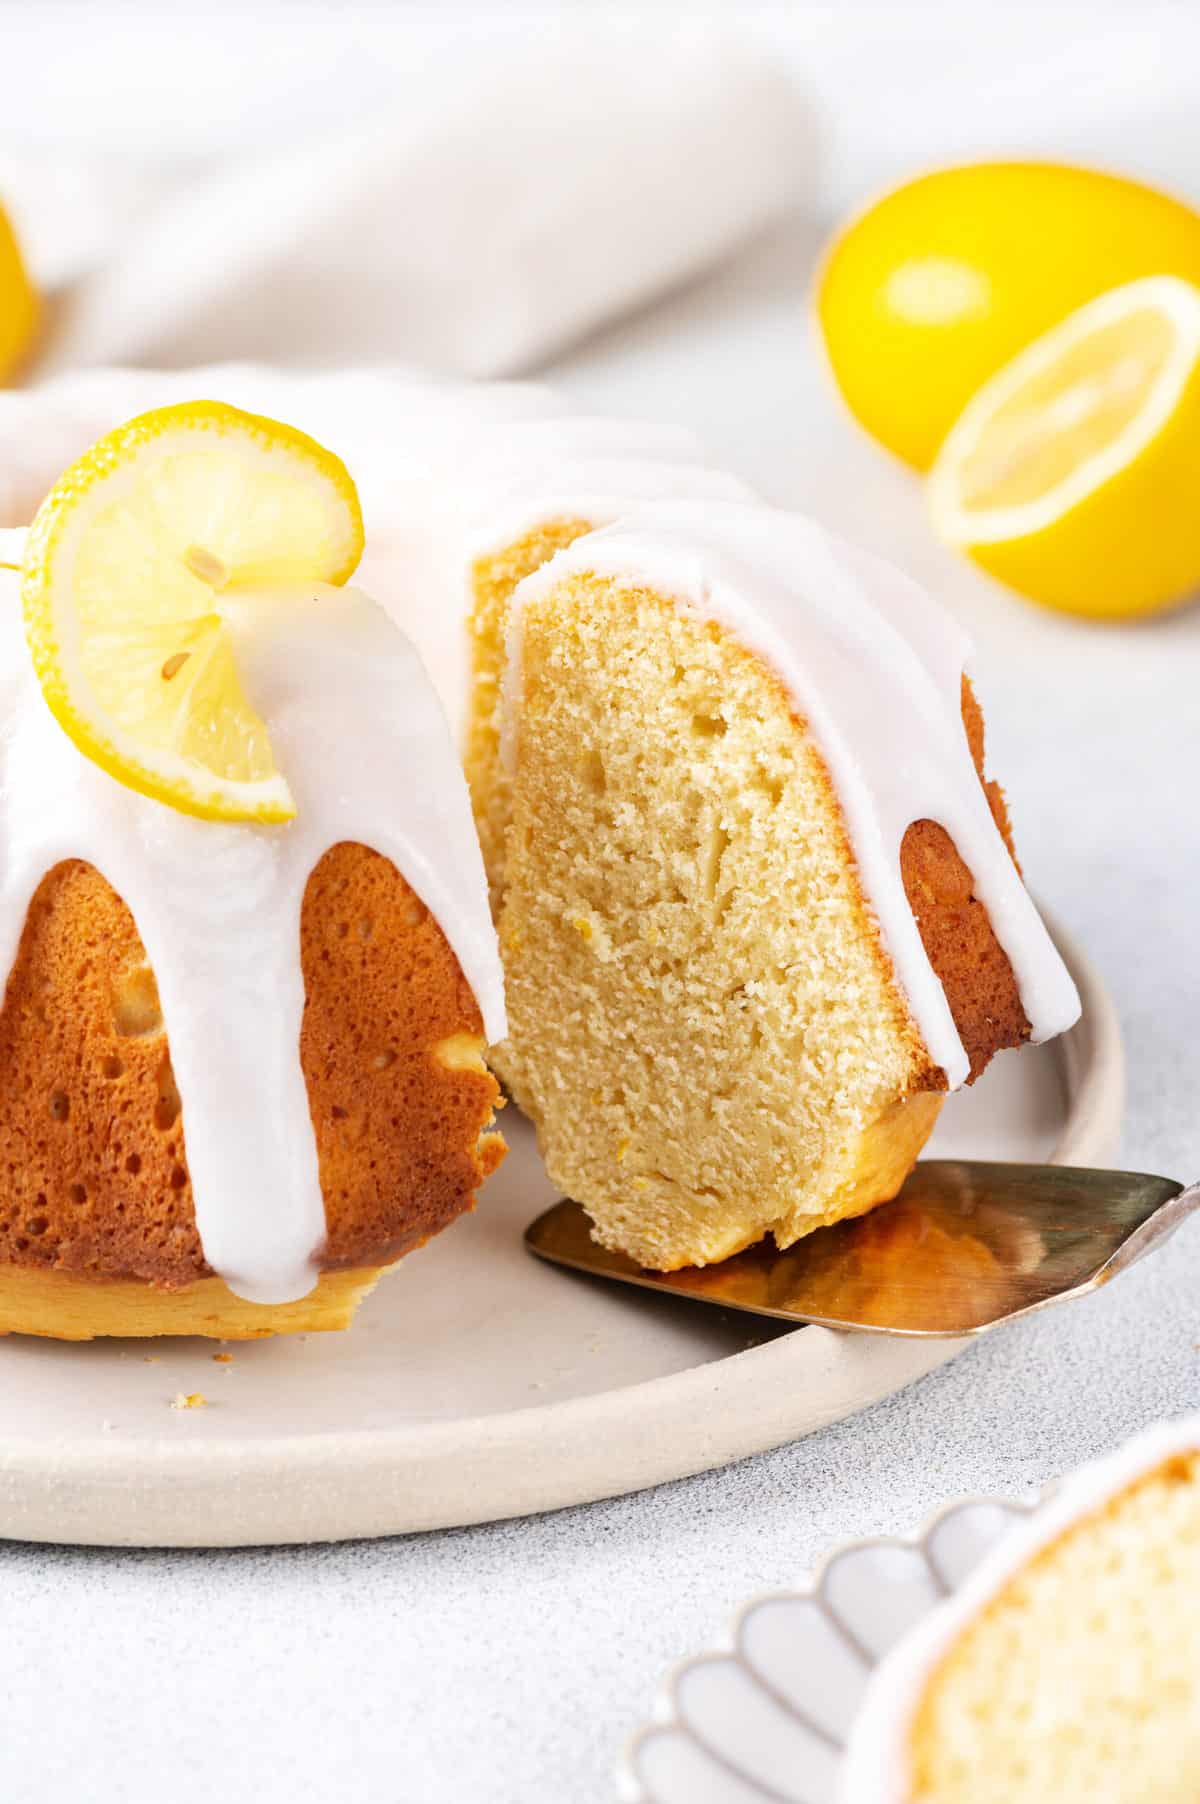 lemon pound cake with lemon glaze sliced to show the cross section